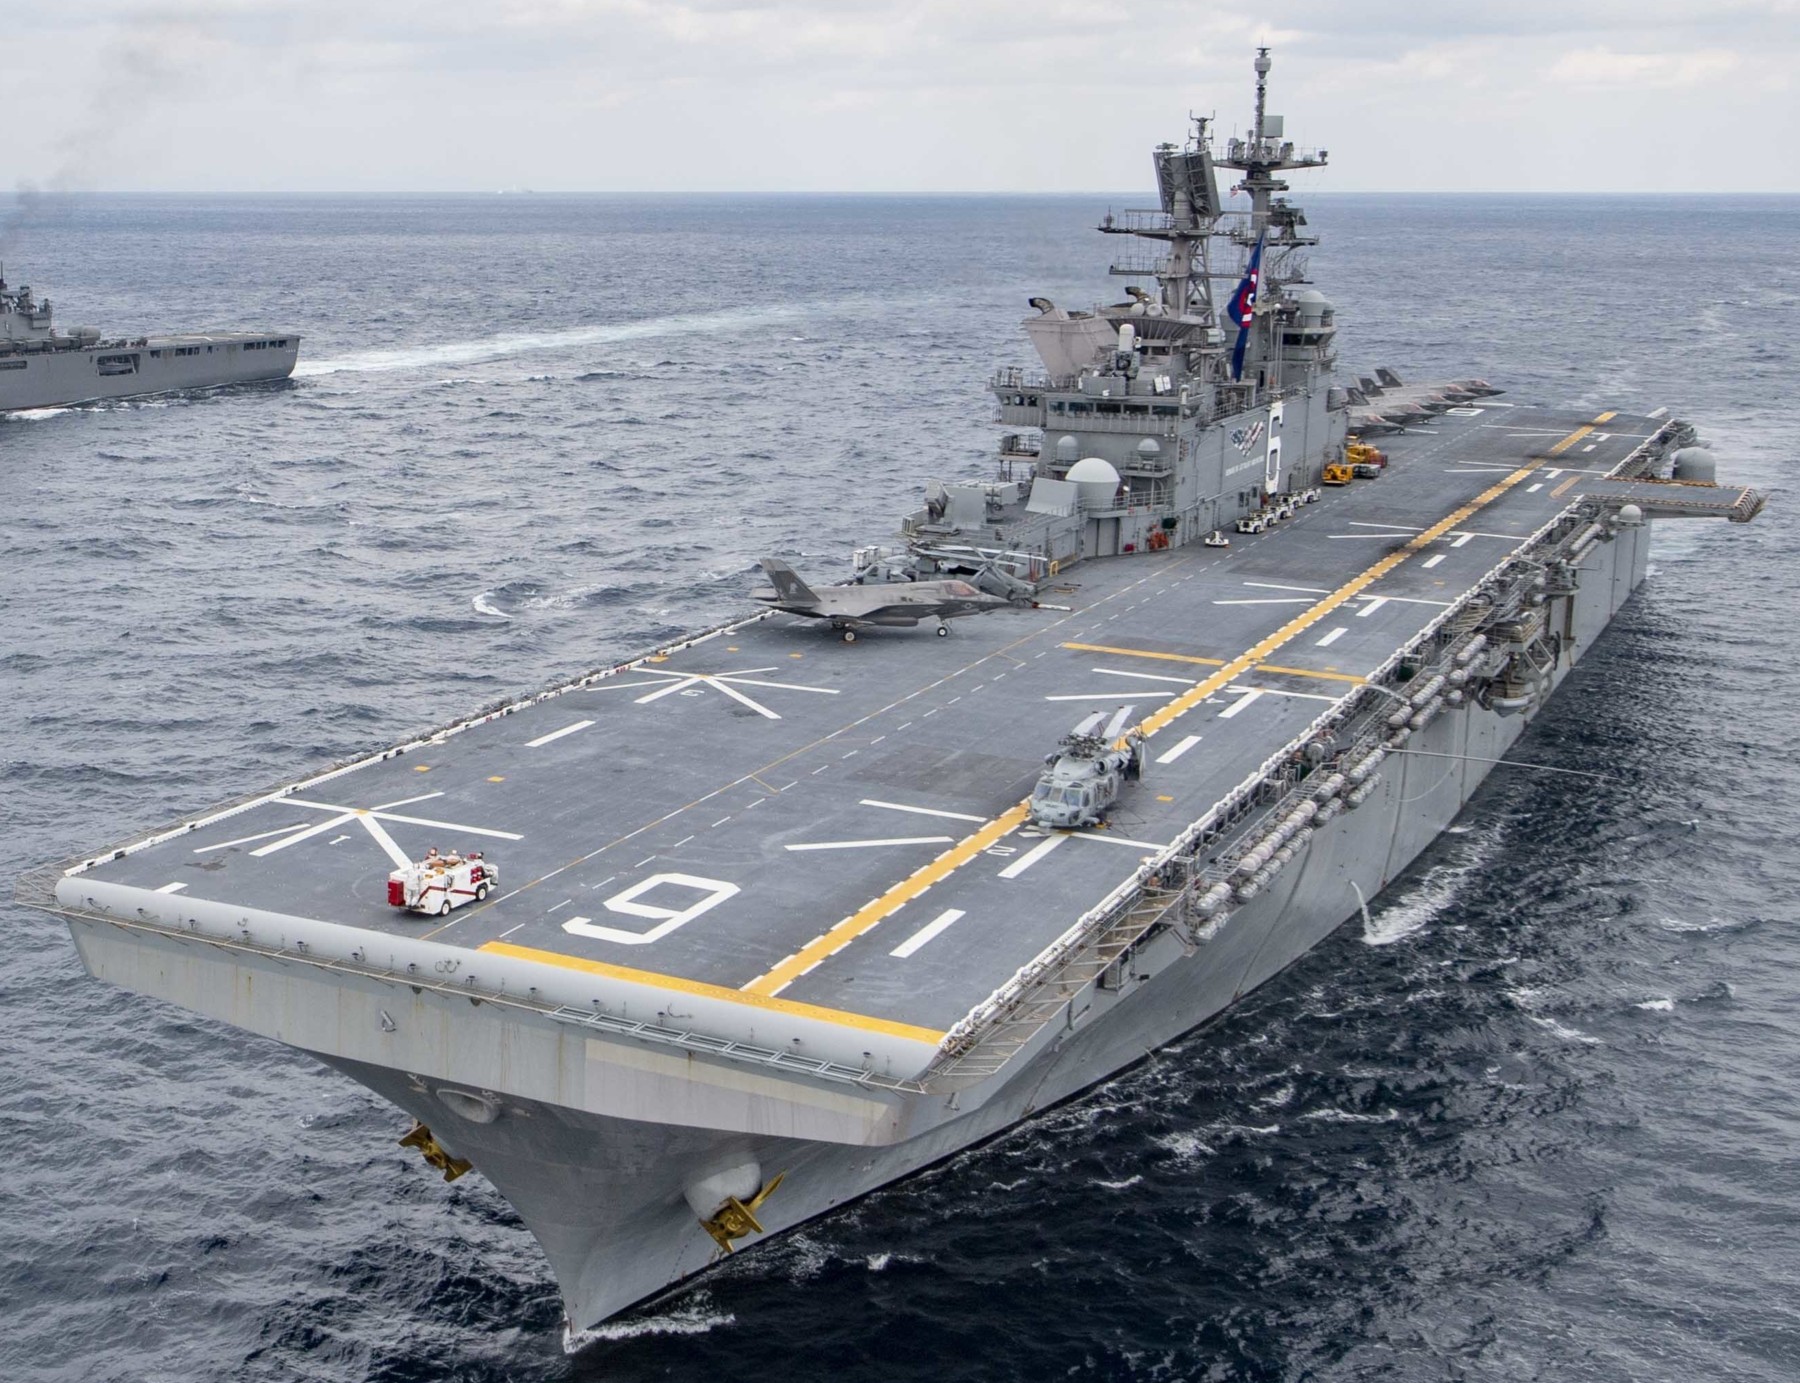 lha-6 uss america amphibious assault ship landing us navy marines east china sea 153